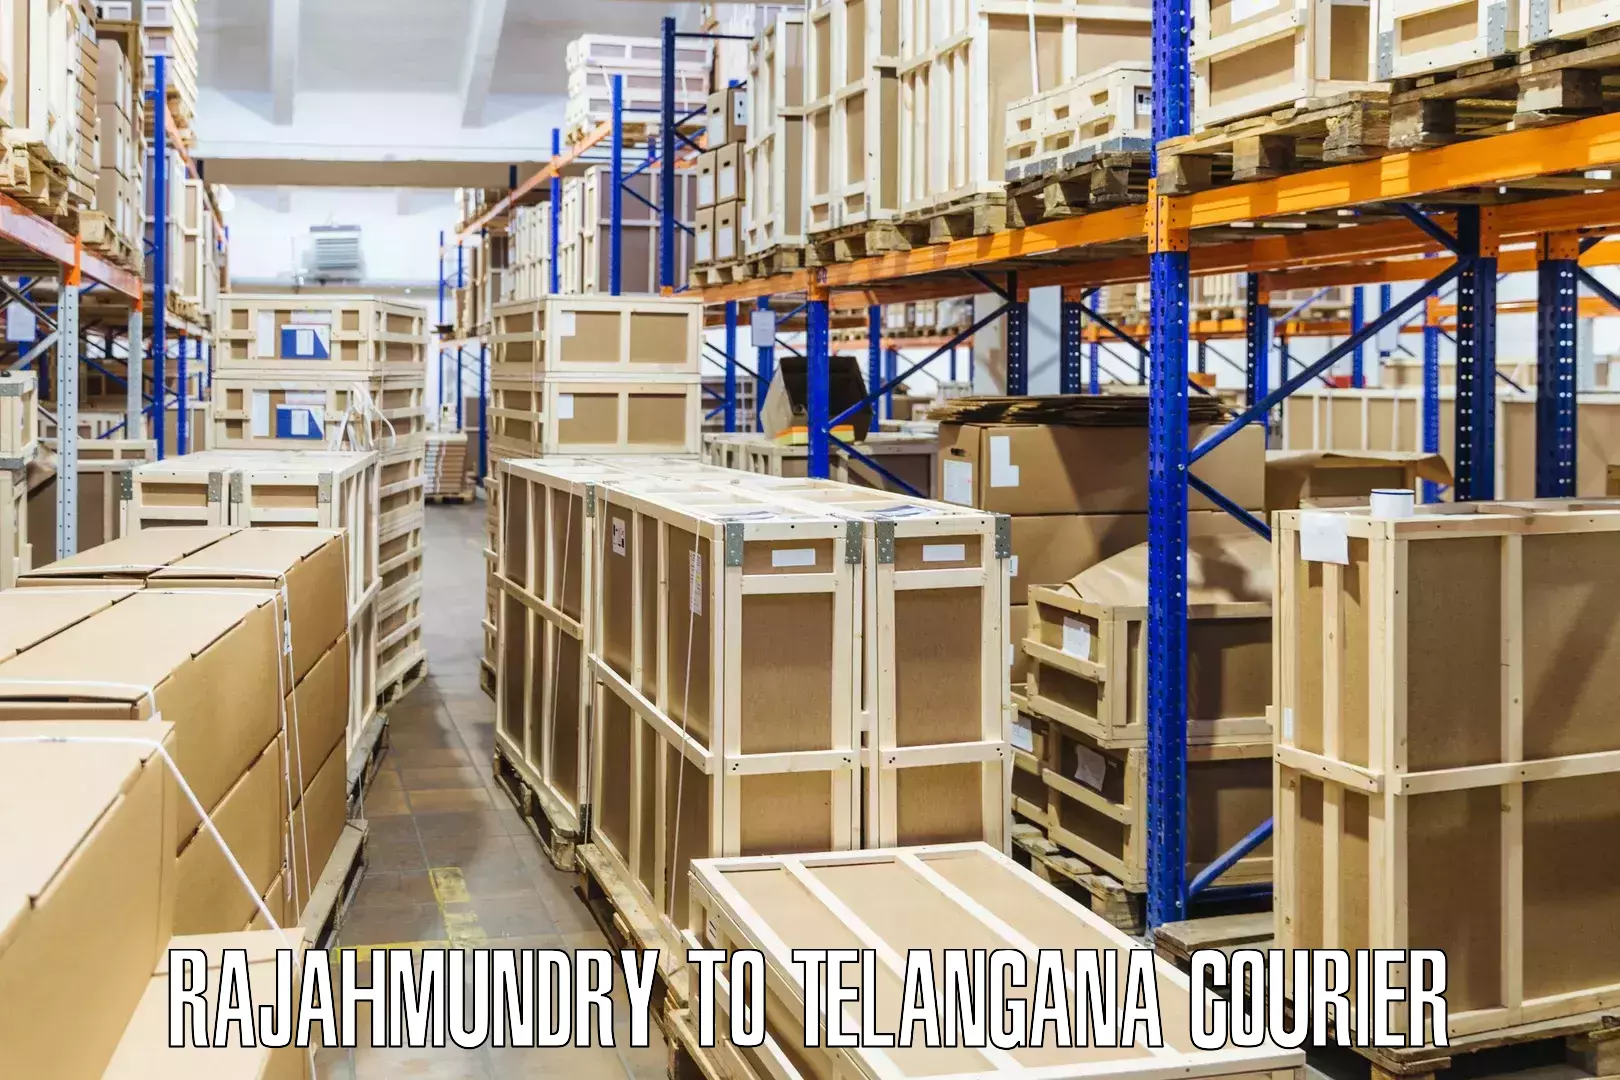 Courier service comparison Rajahmundry to Secunderabad